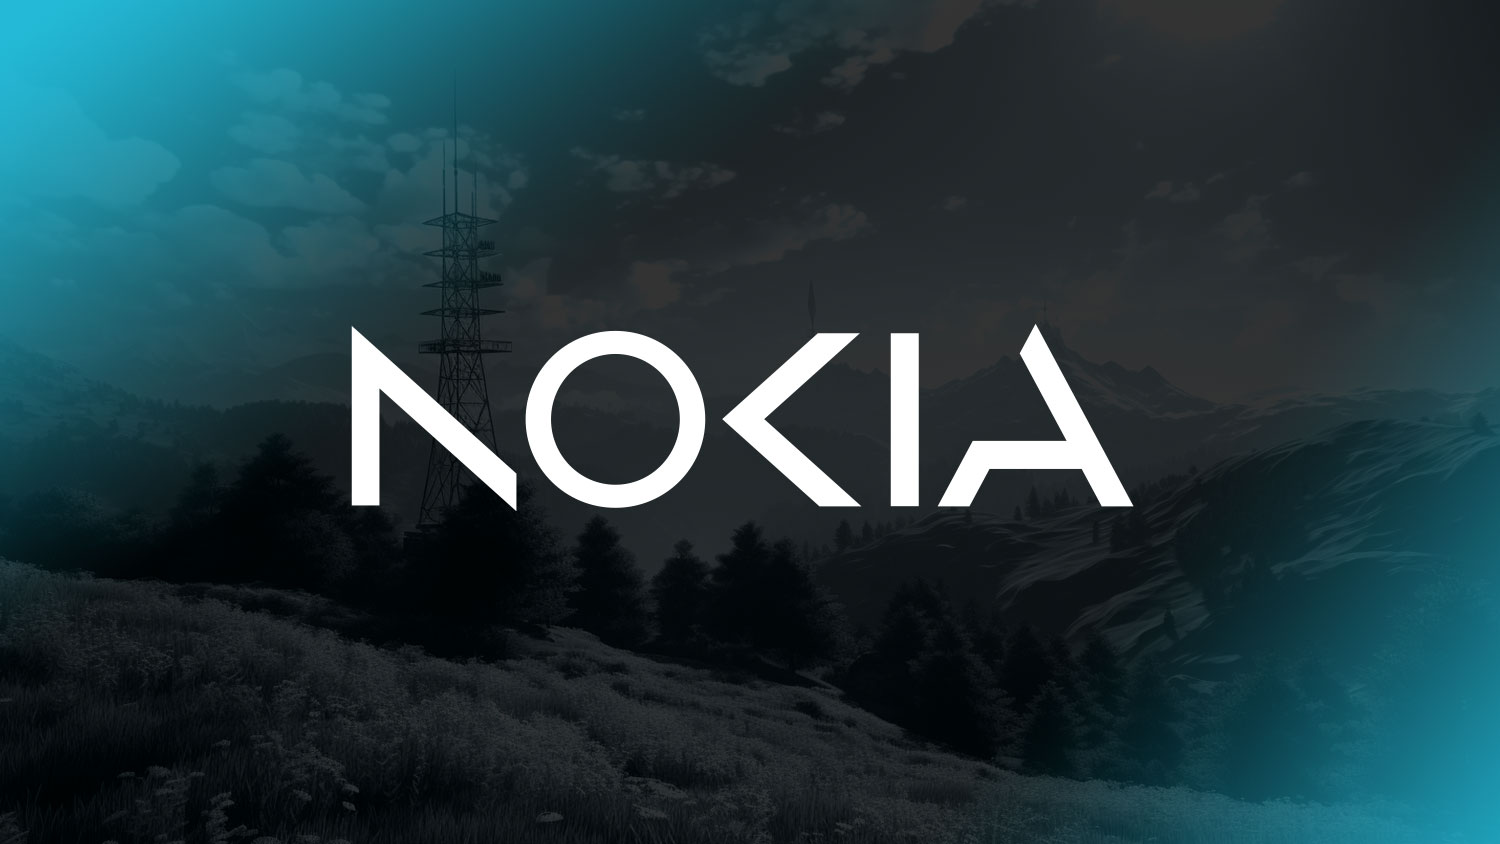 Northcom joins Nokia Global Partner Program